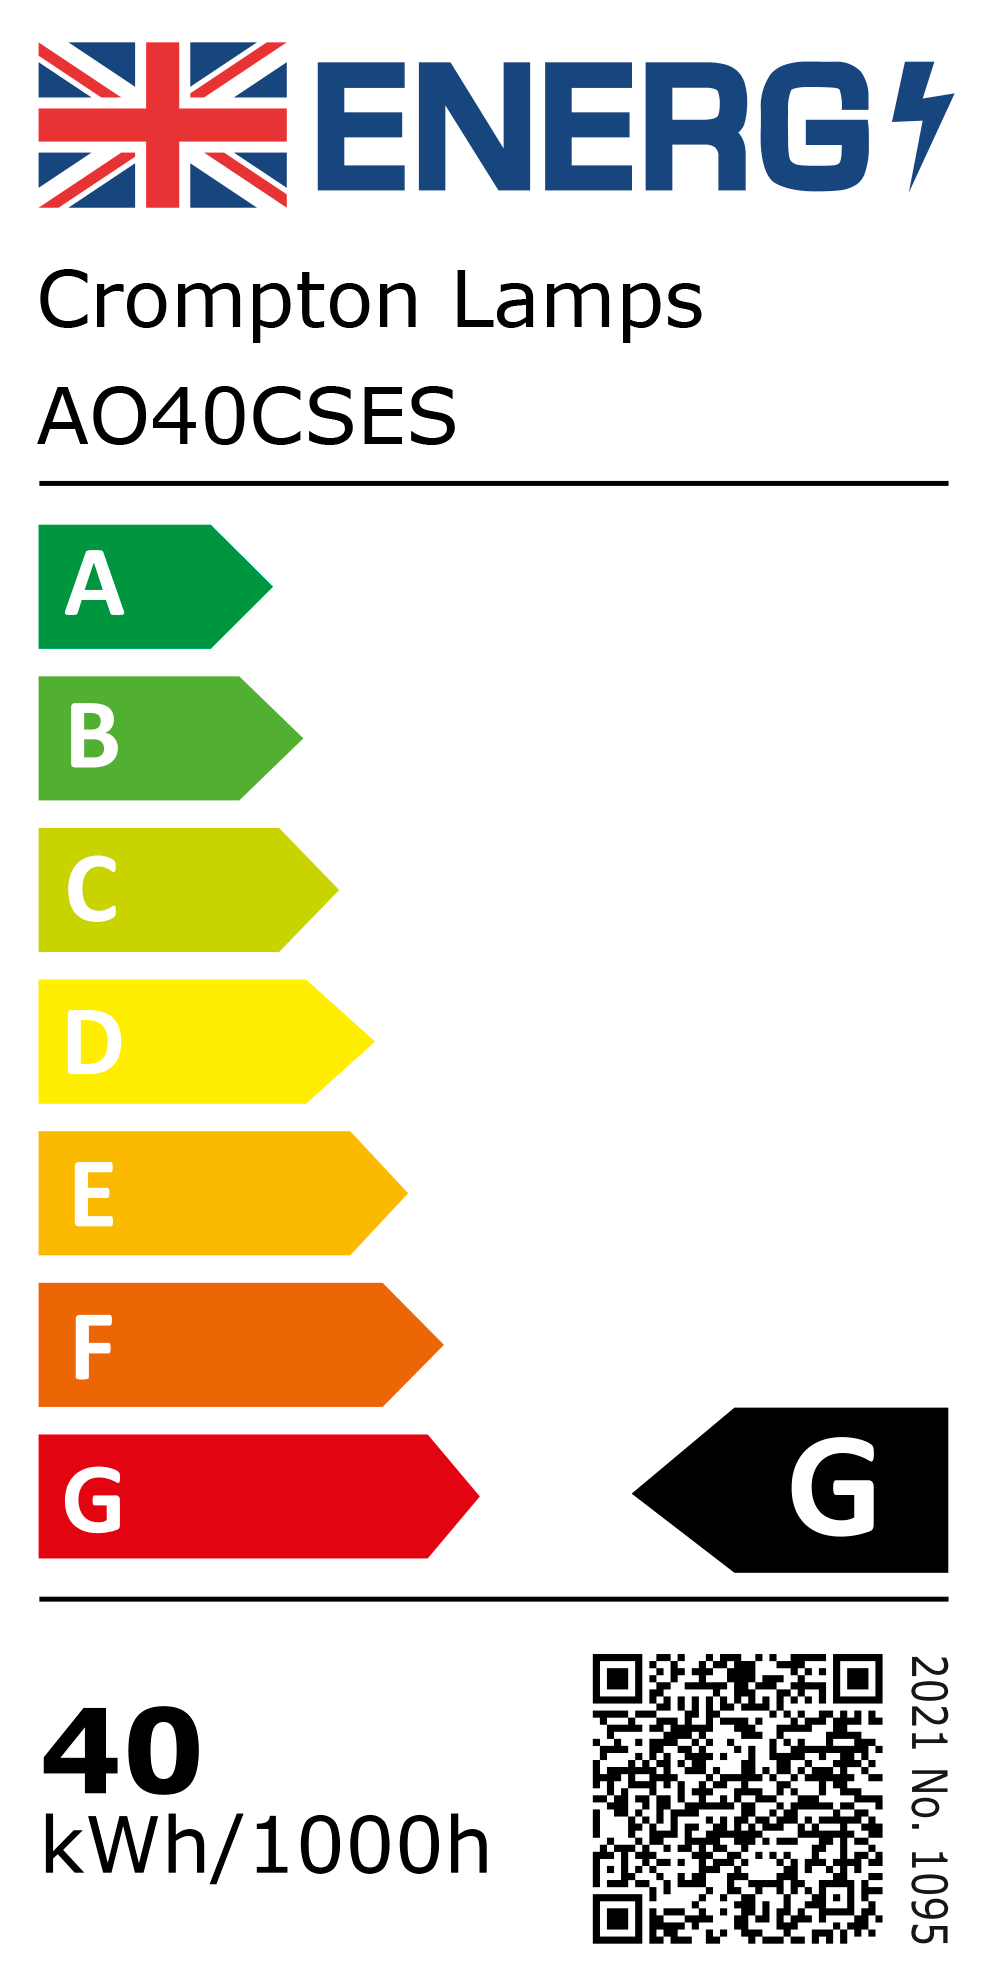 New 2021 Energy Rating Label: Stock Code AO40CSES